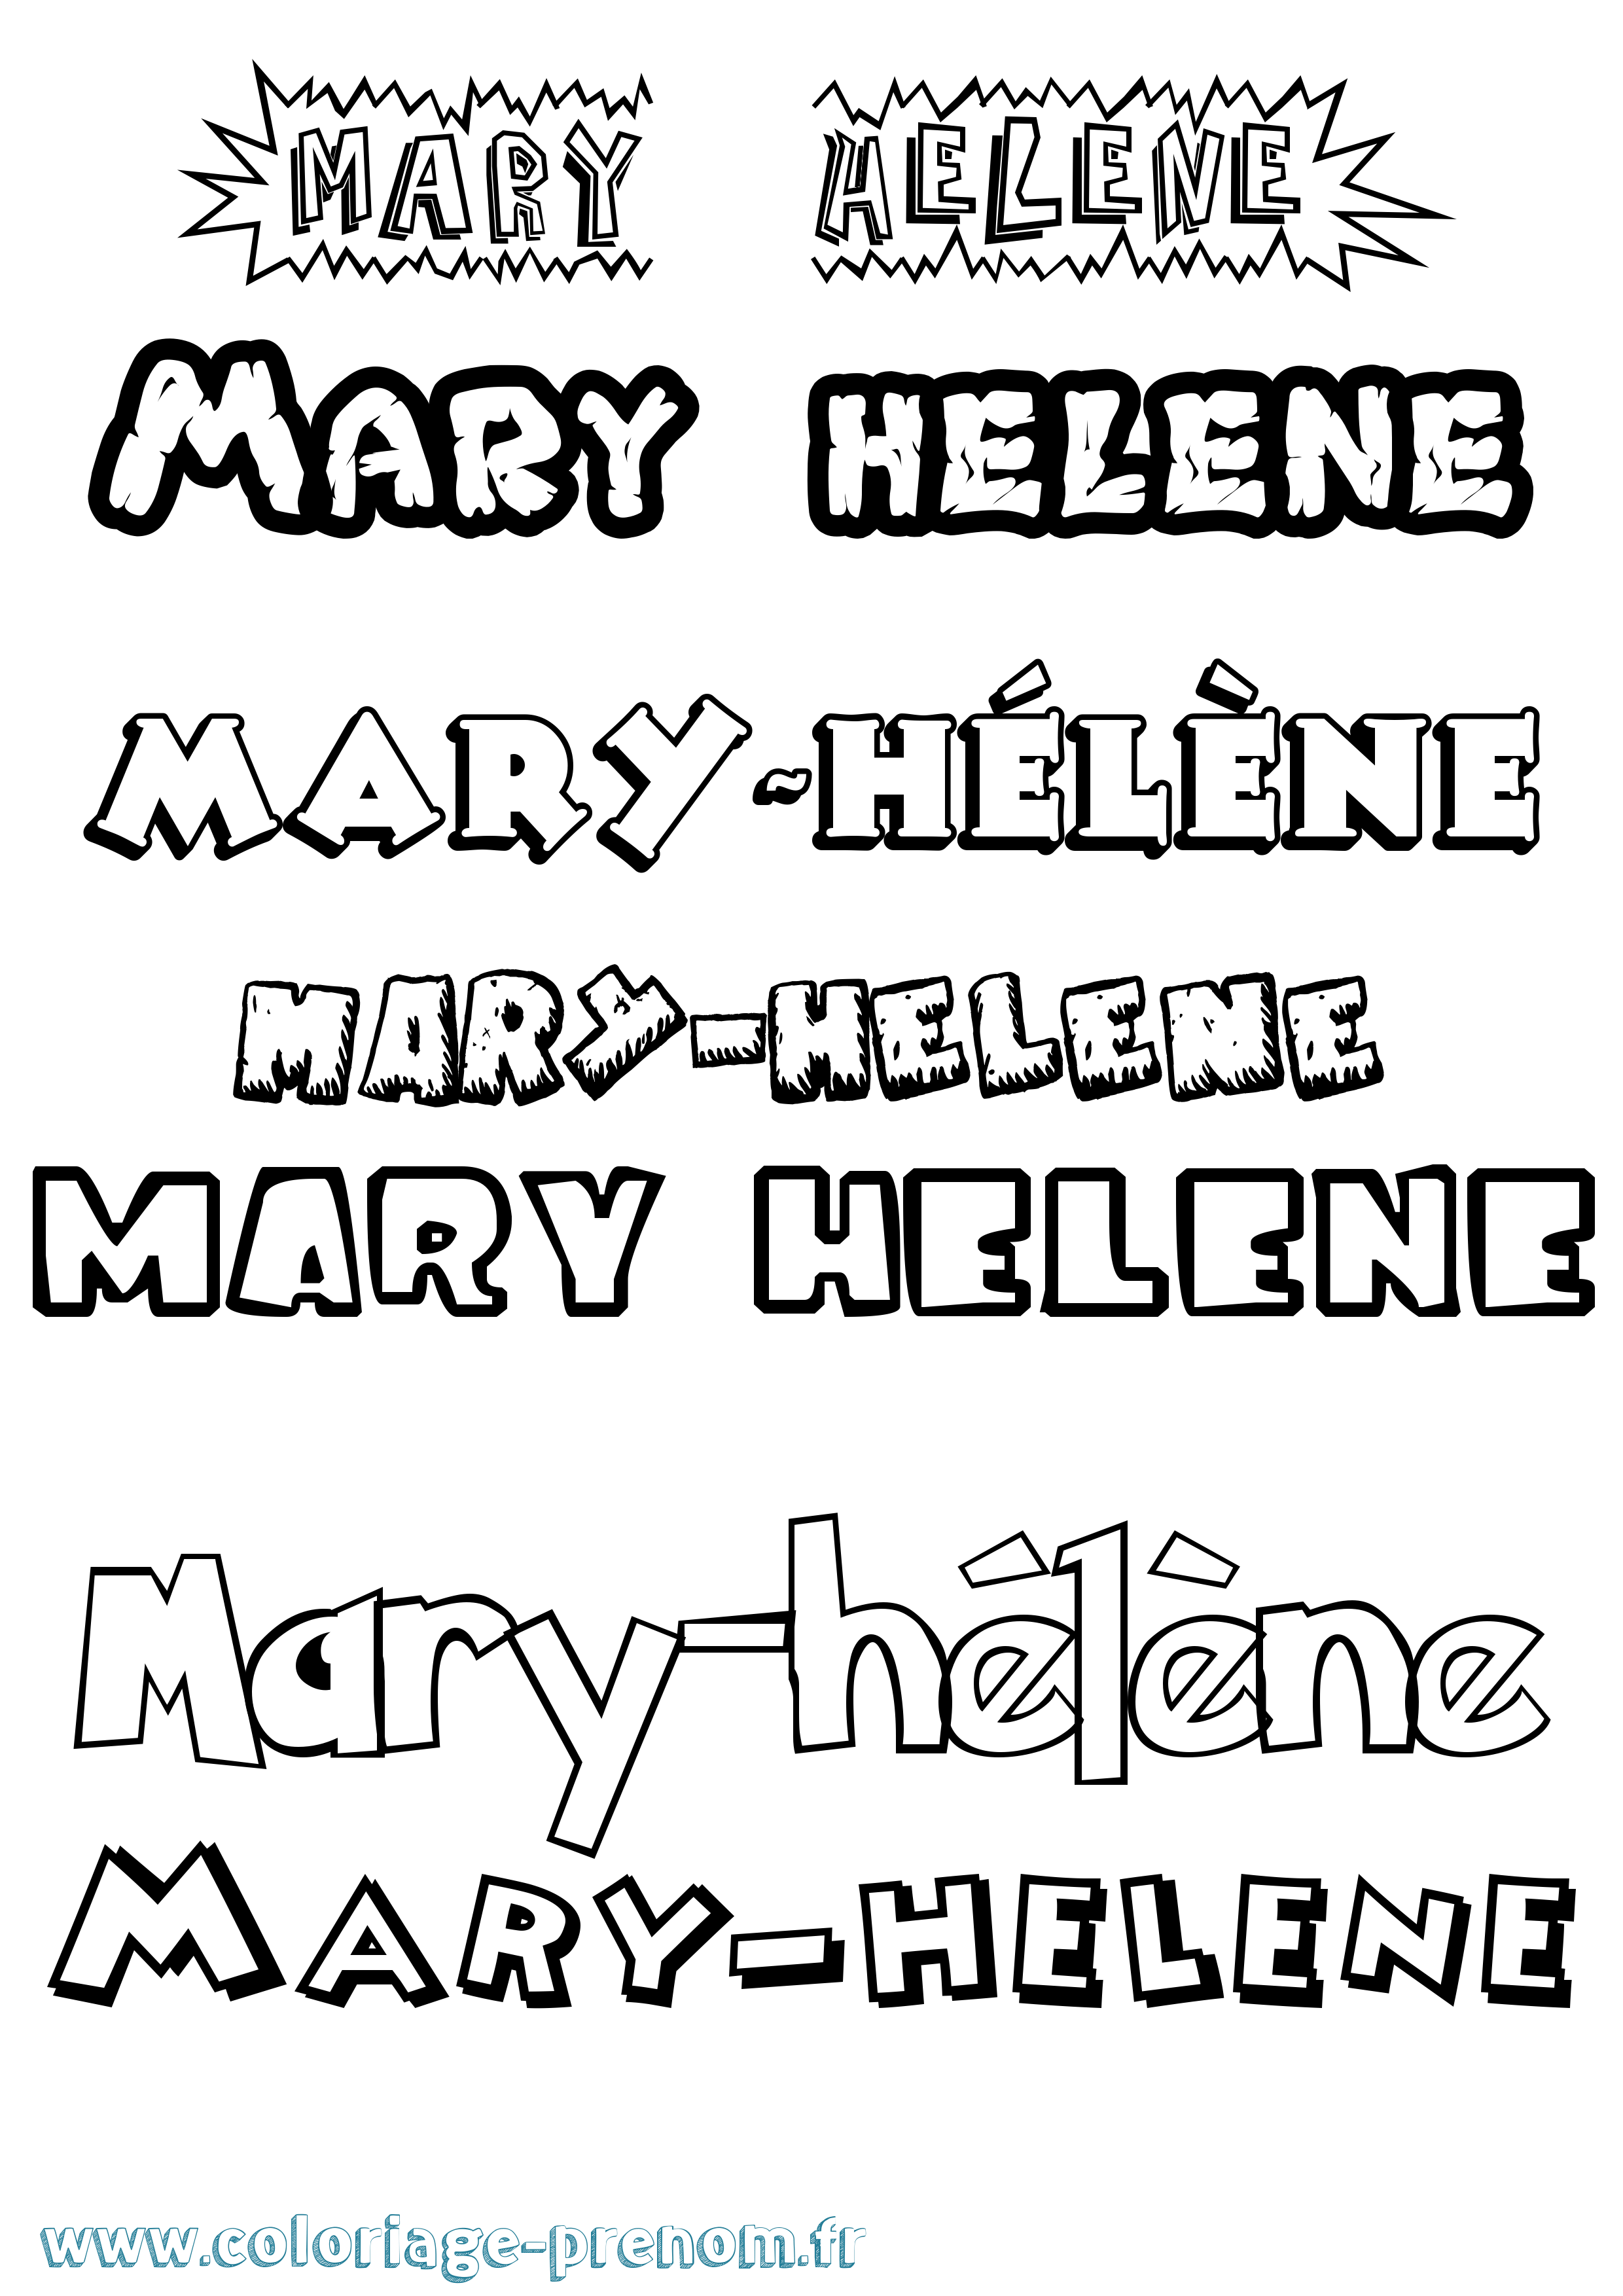 Coloriage prénom Mary-Hélène Dessin Animé